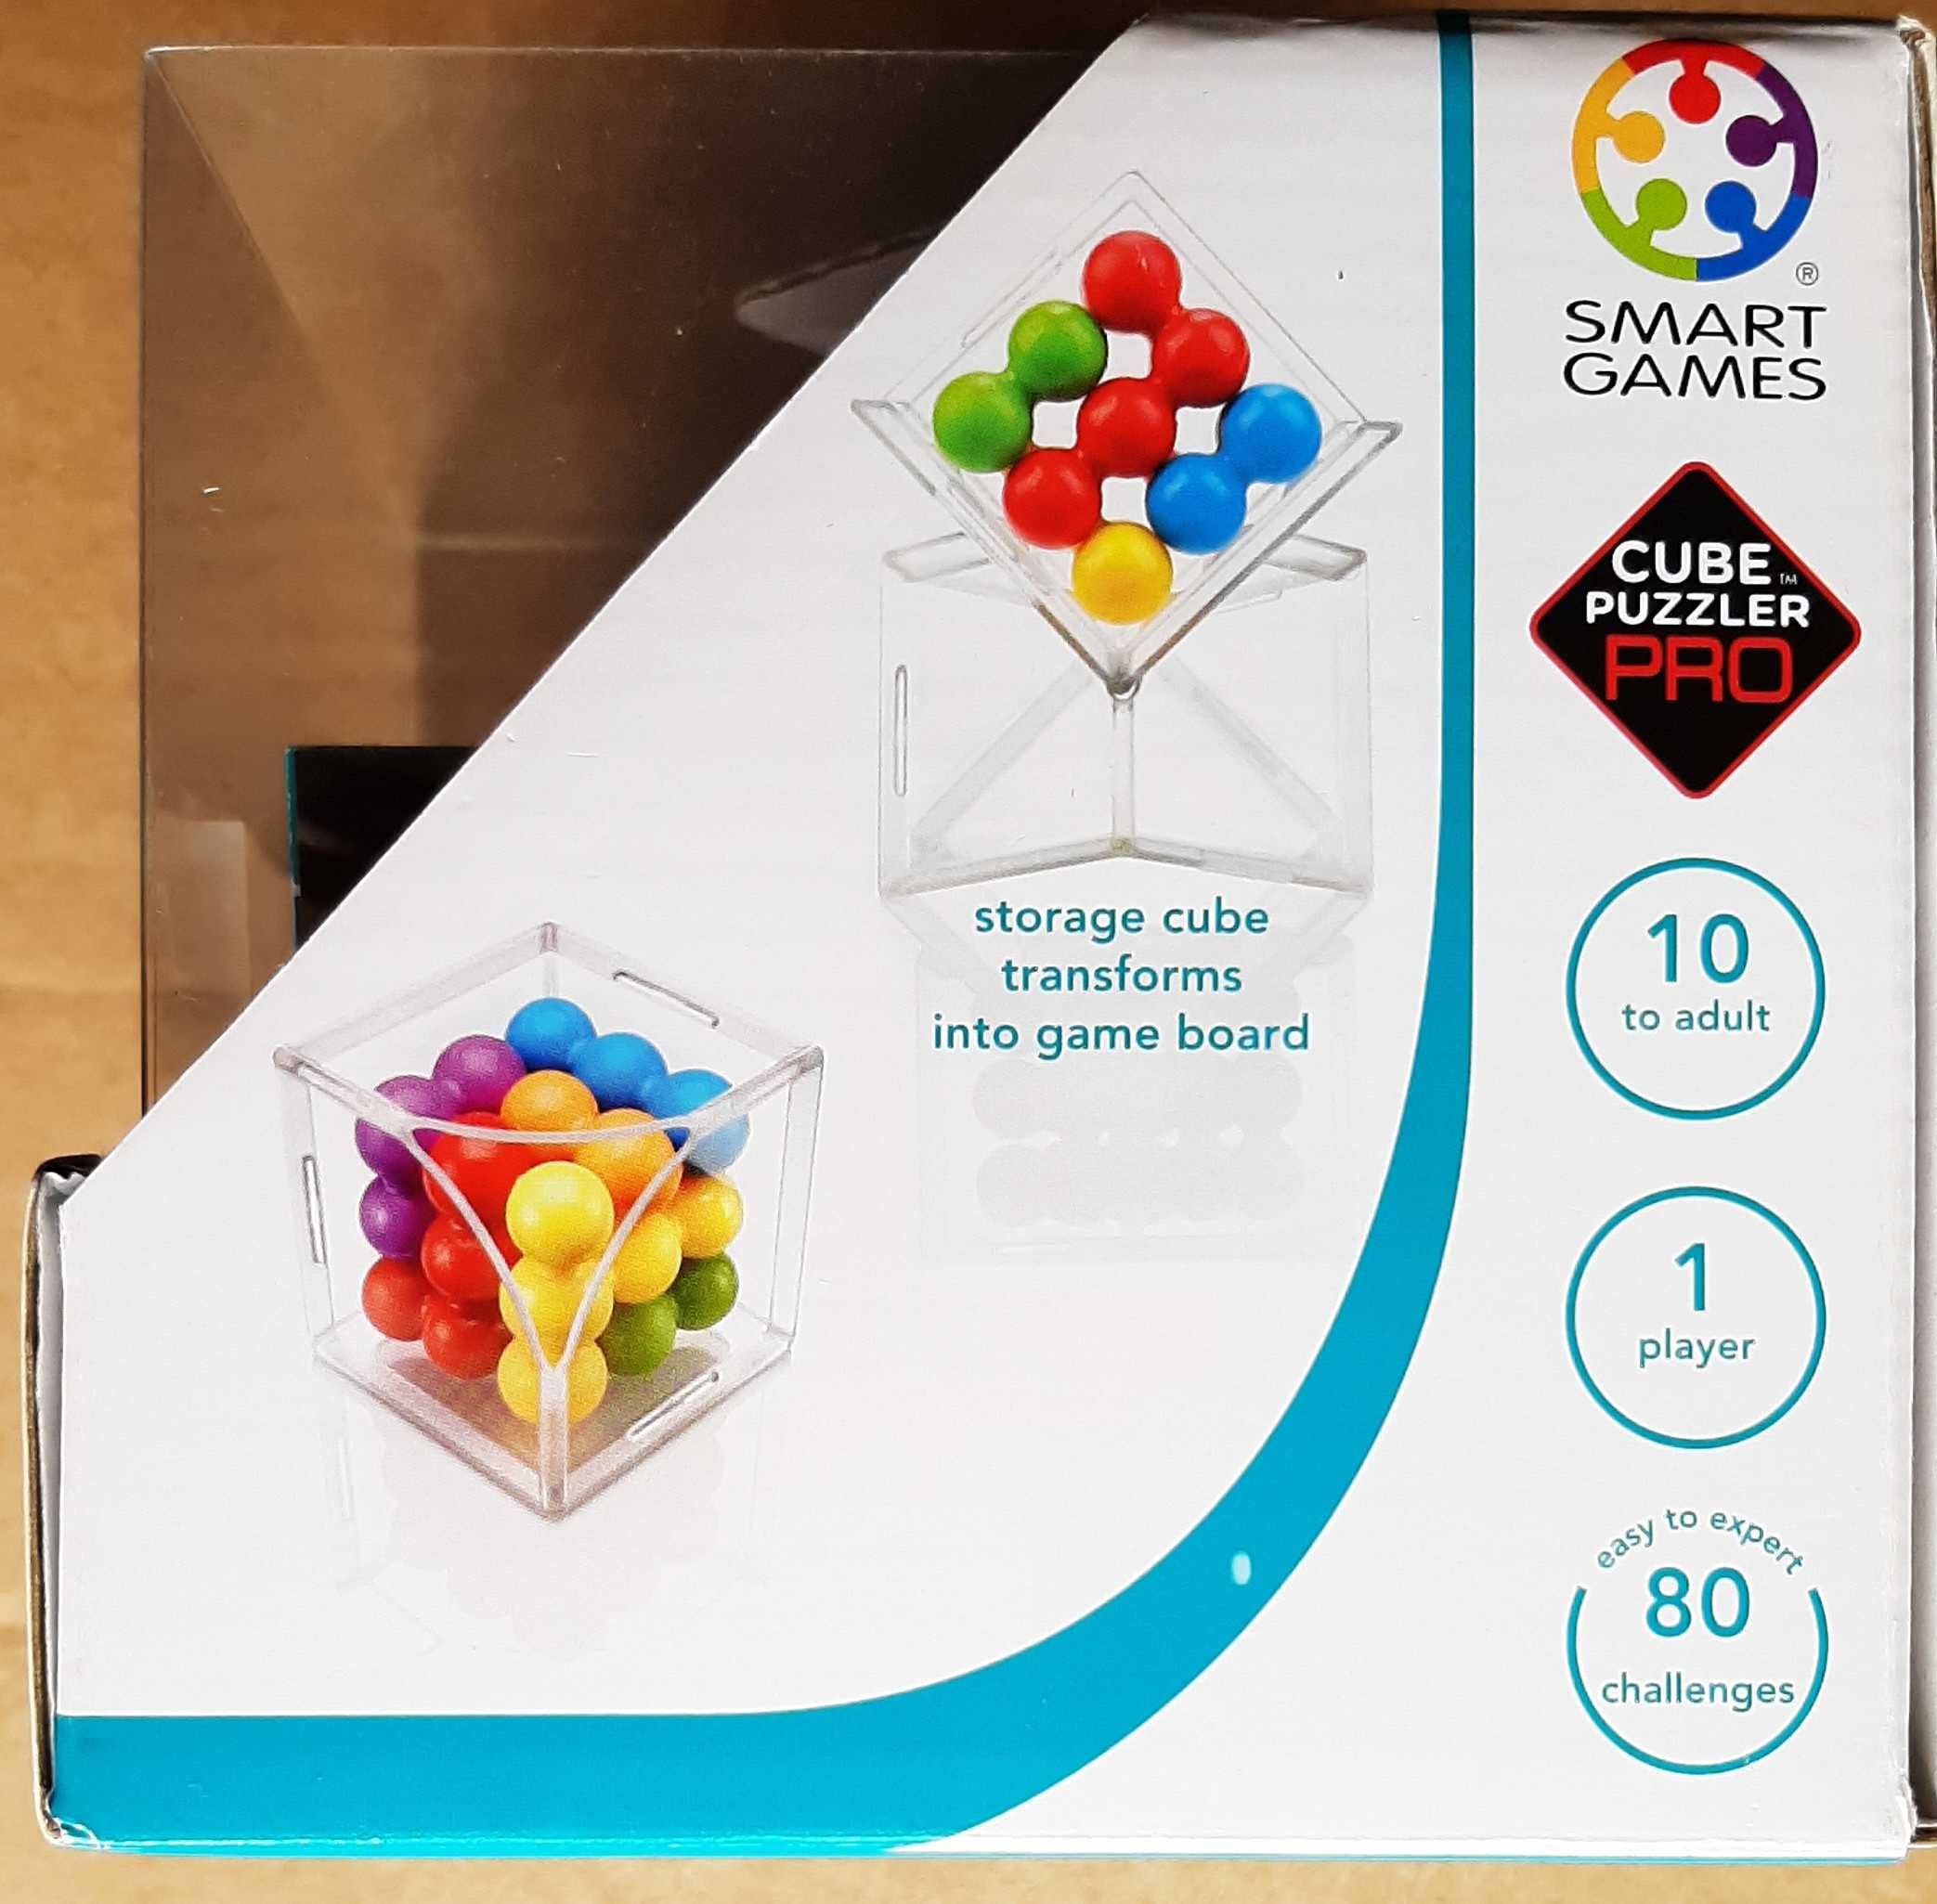 Smart Games - Cube Puzzler Pro